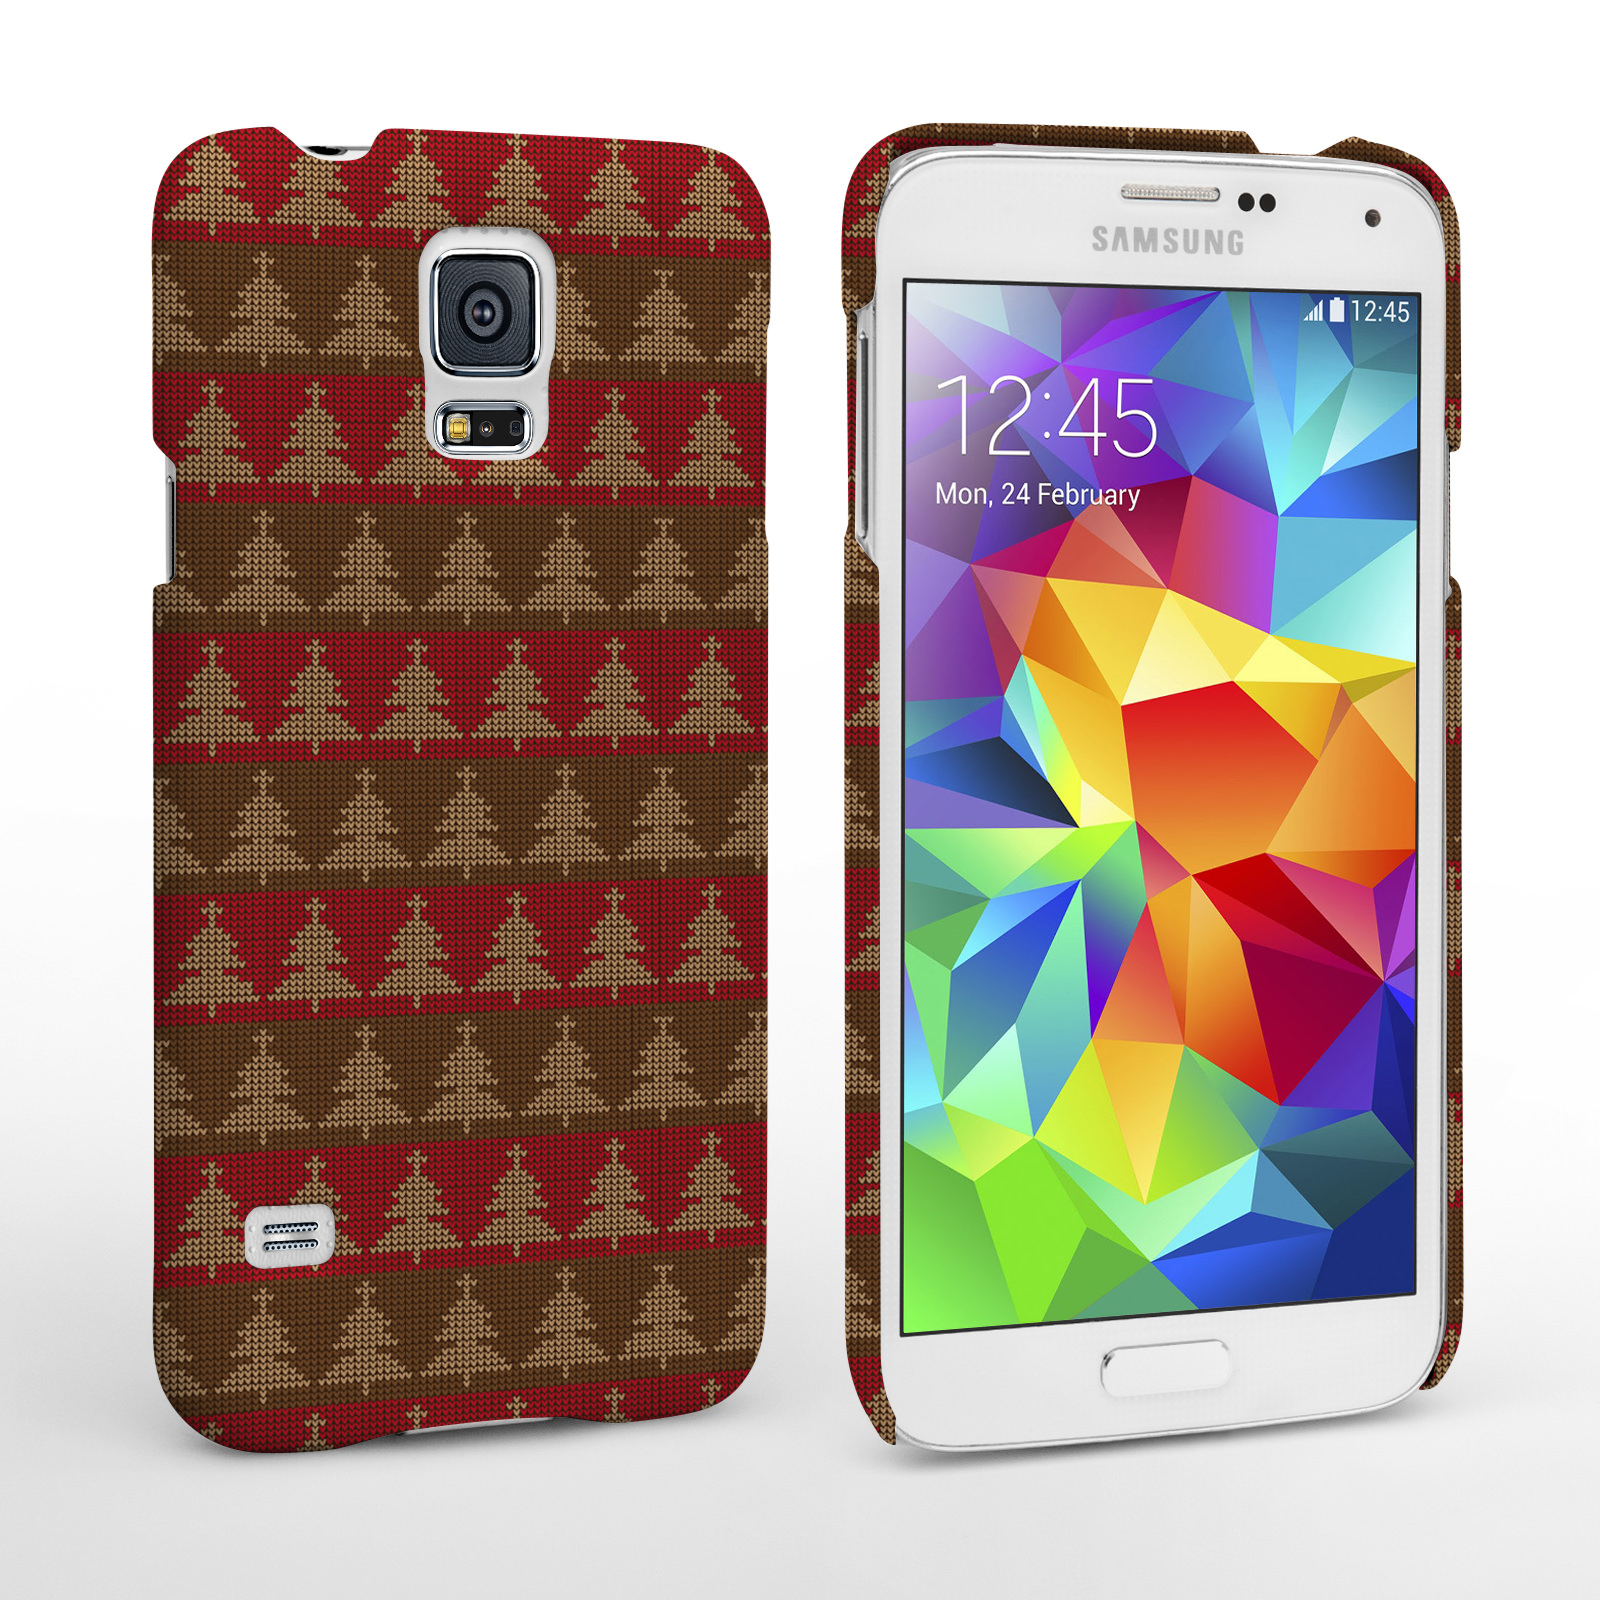 Caseflex Samsung Galaxy S5 Christmas Tree Knit Jumper Hard Case Brown / Red